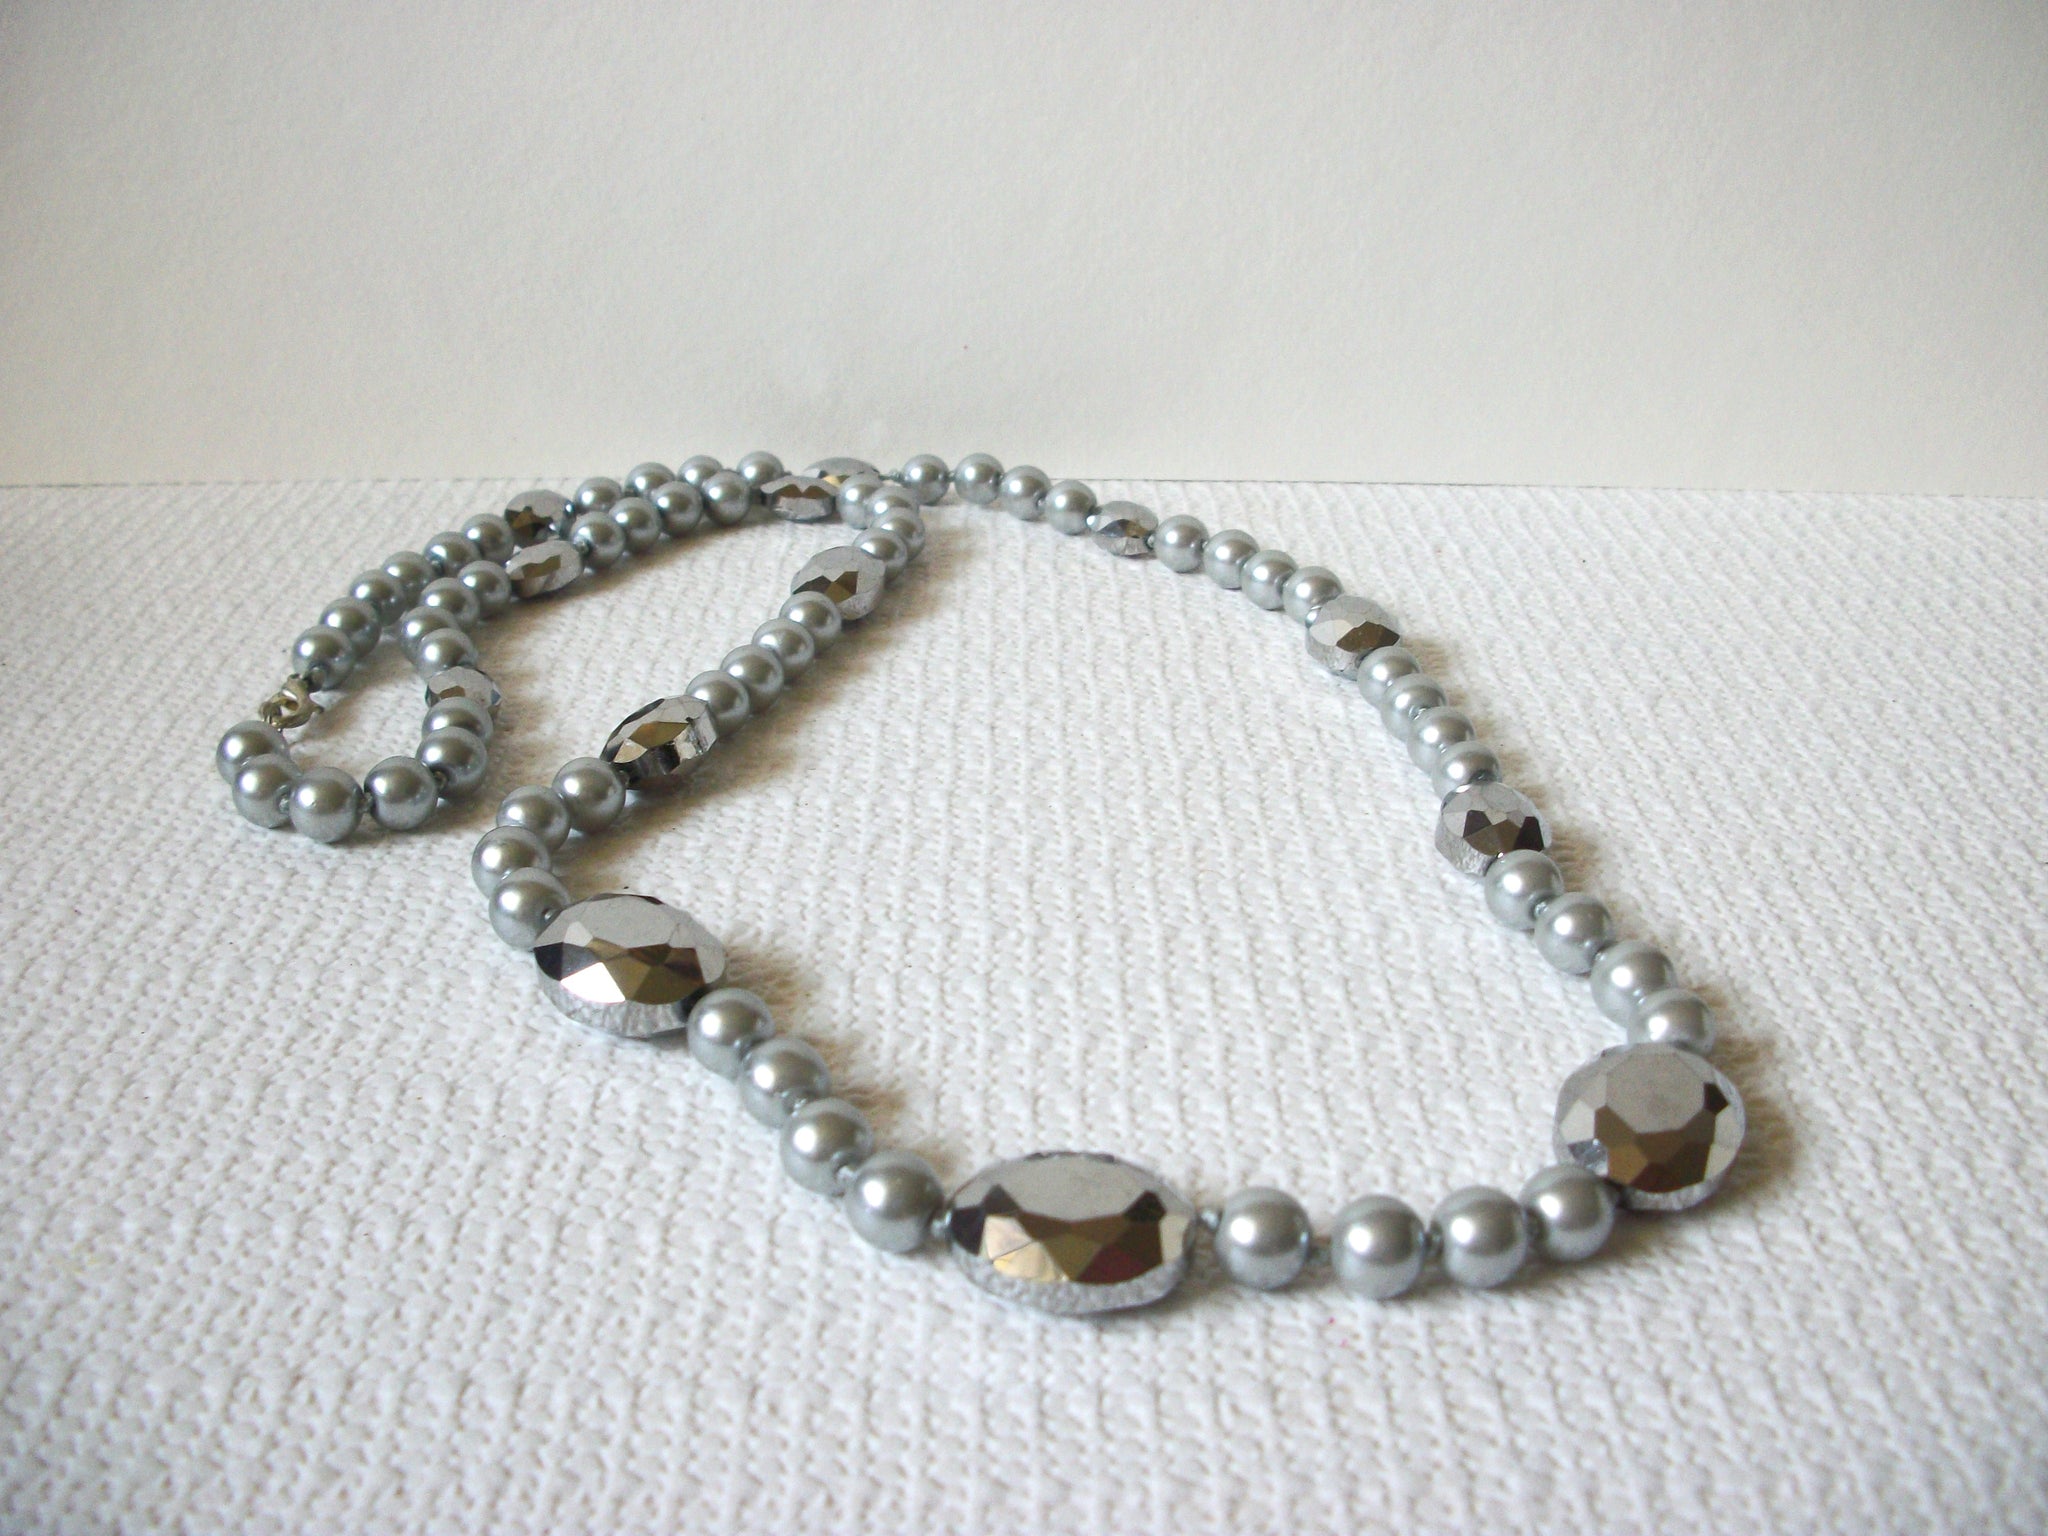 Retro Silver Grey Glass Necklace 91420